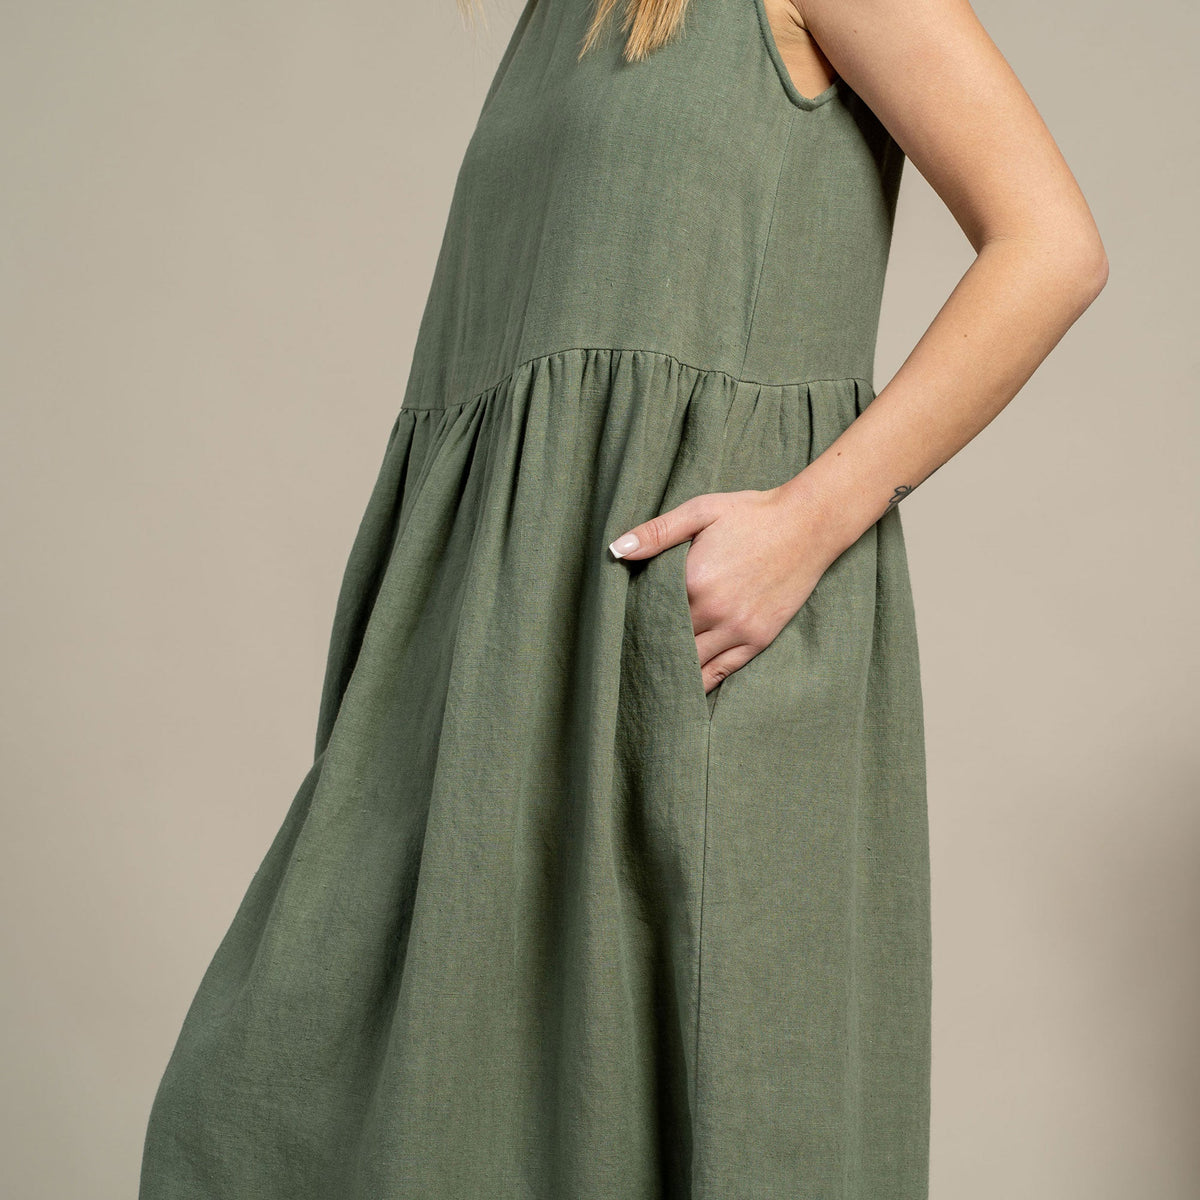 MENIQUE 100% Linen Smock Dress Maya Stone Green